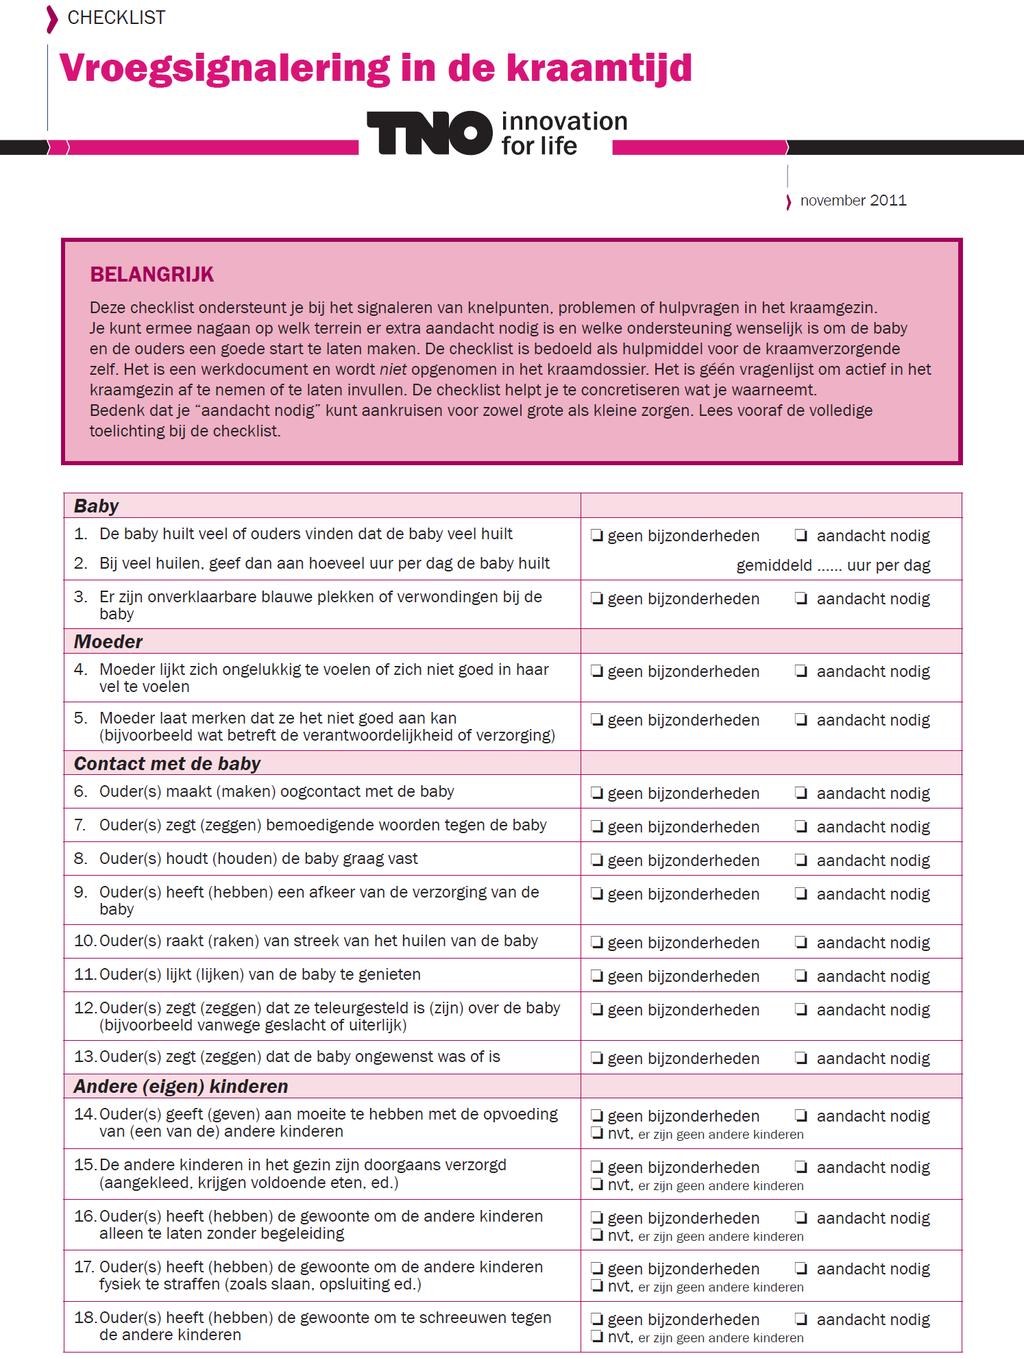 Bijlage 2 Checklist Vroegsignalering in